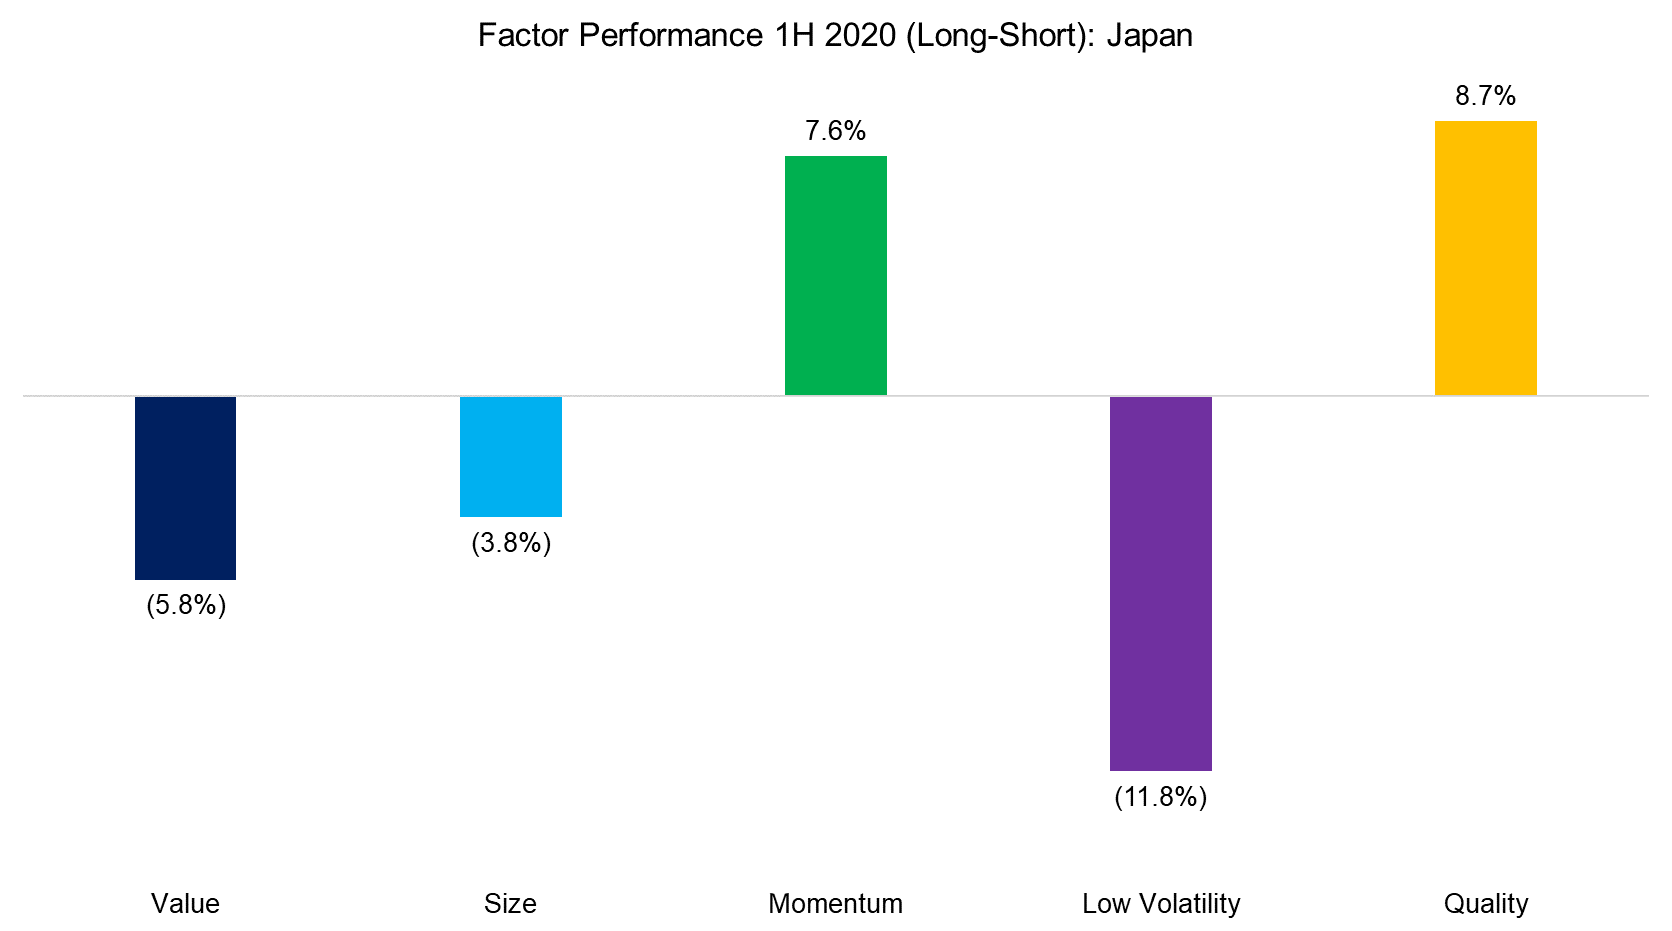 Factor Performance 1H 2020 (Long-Short) Japan